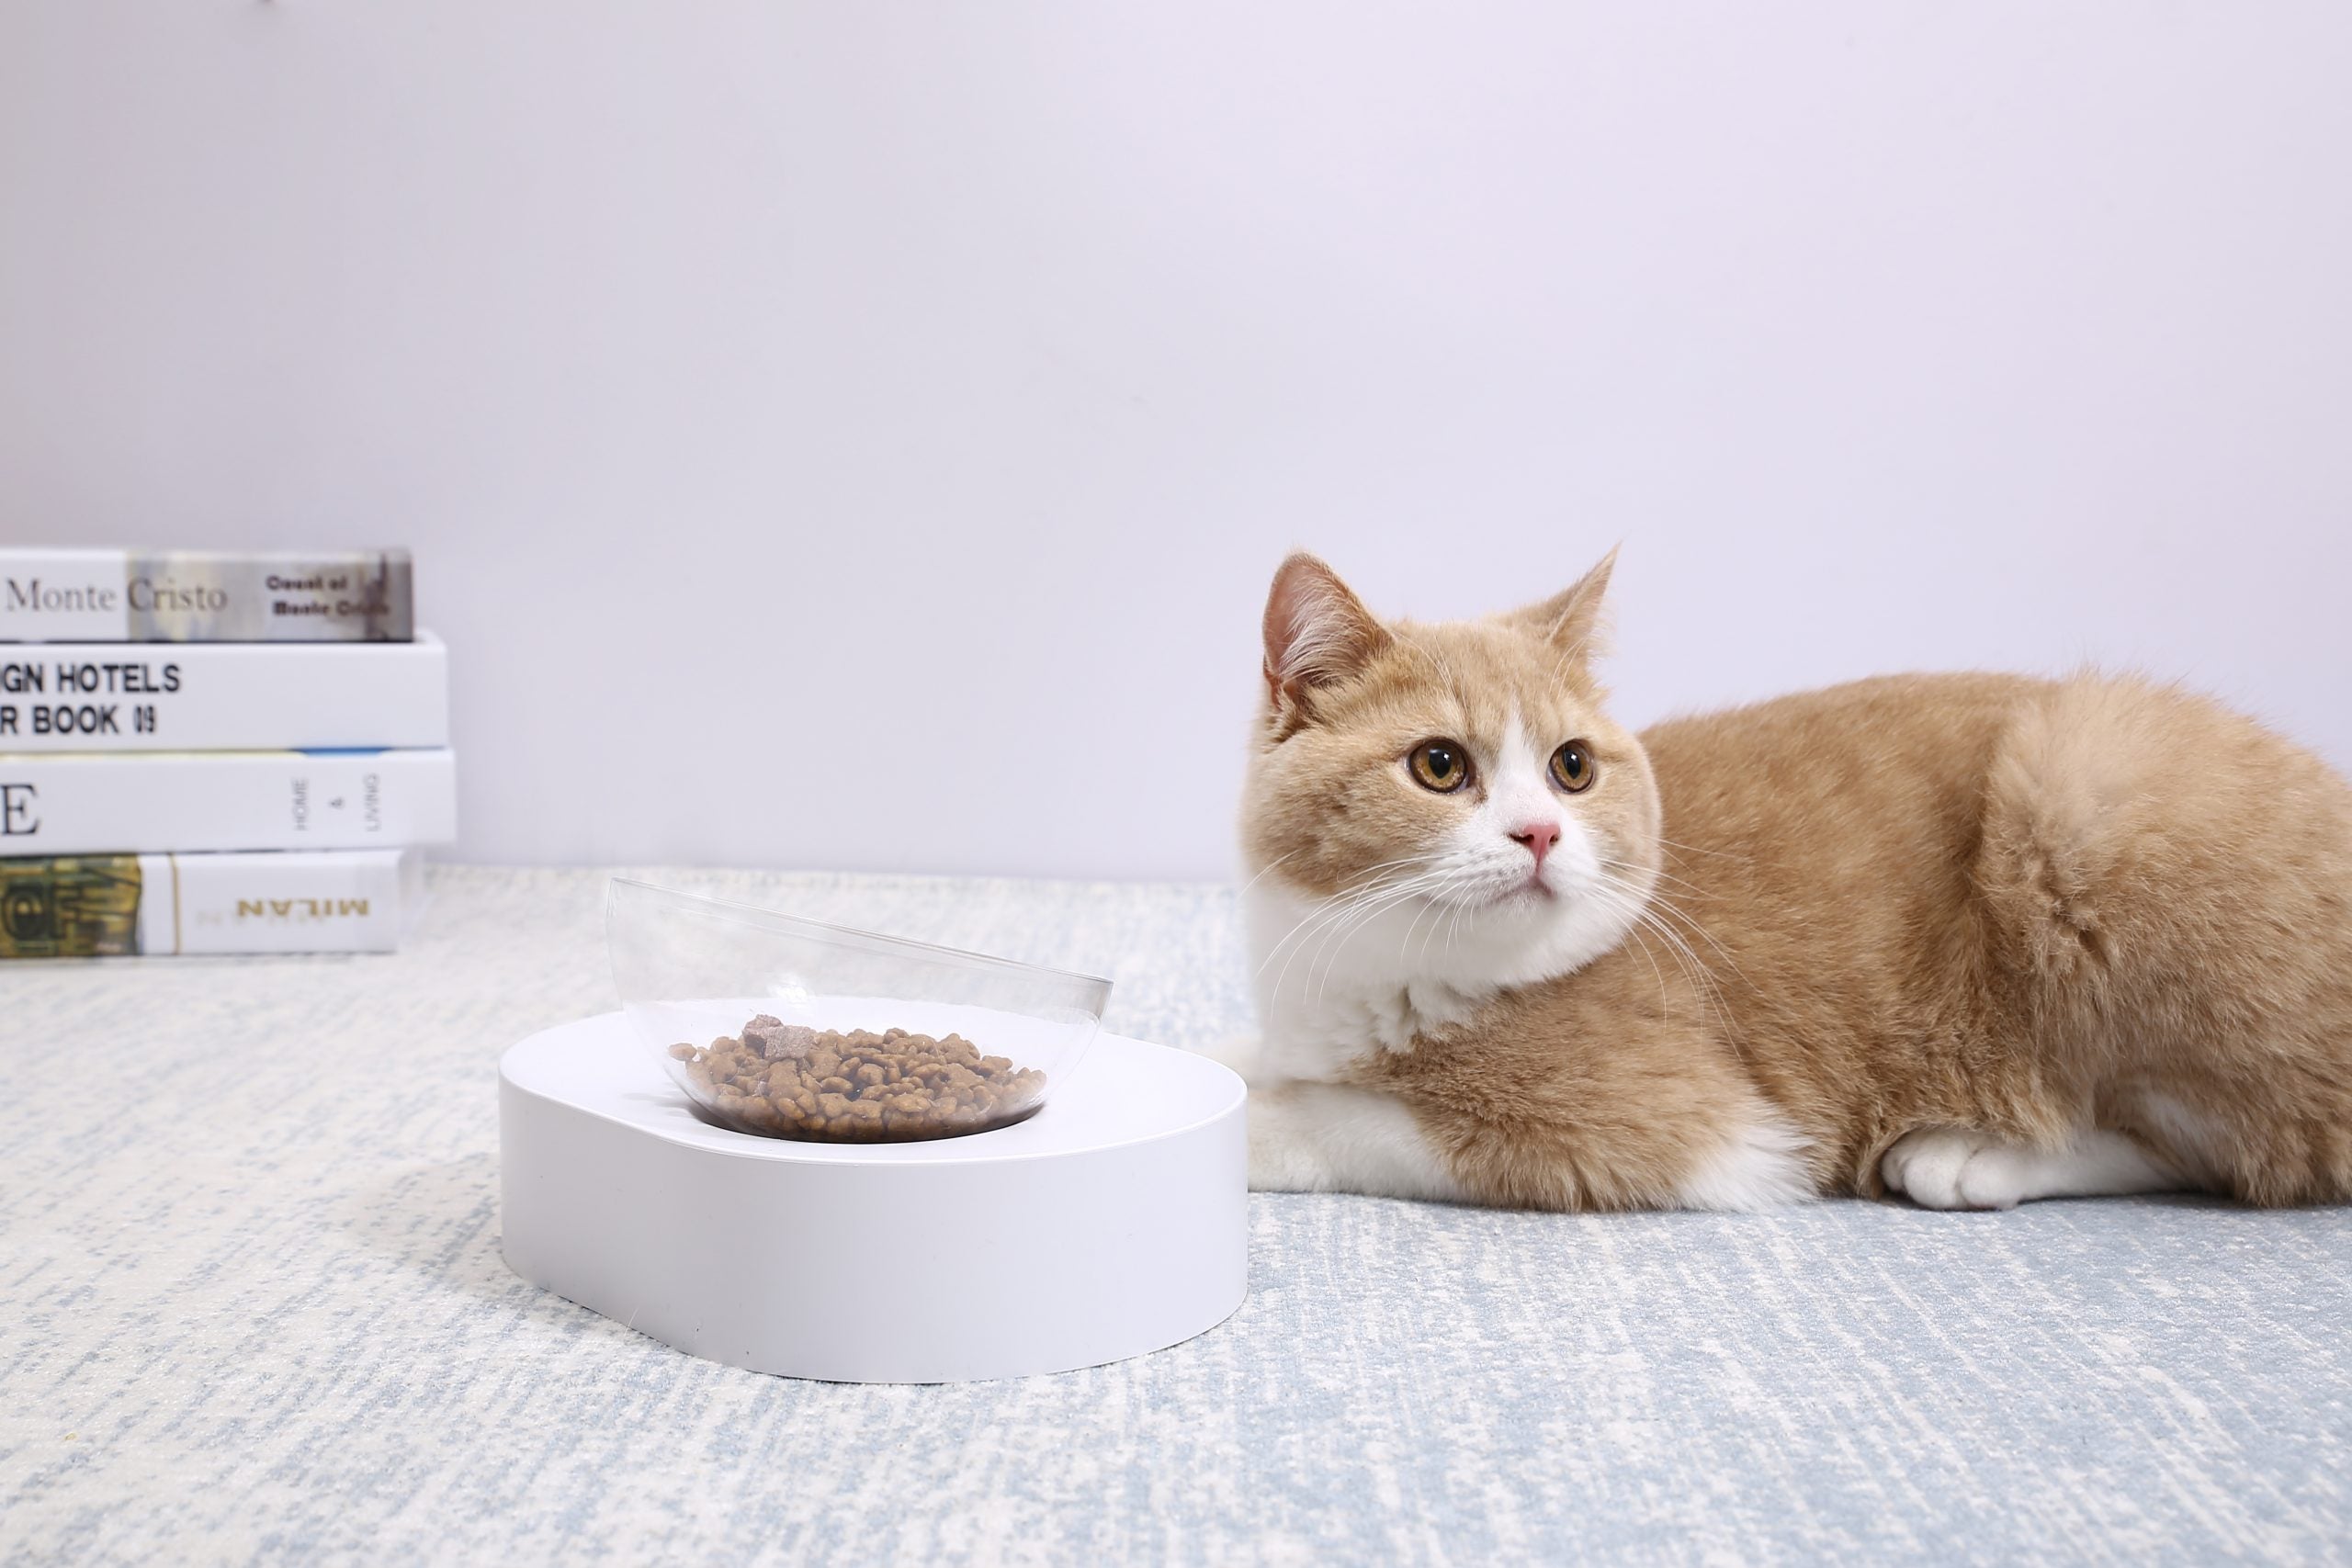 PETKIT Fresh Nano-15 Adjustable Cat Feeding Bowl -Single - SILBERSHELL